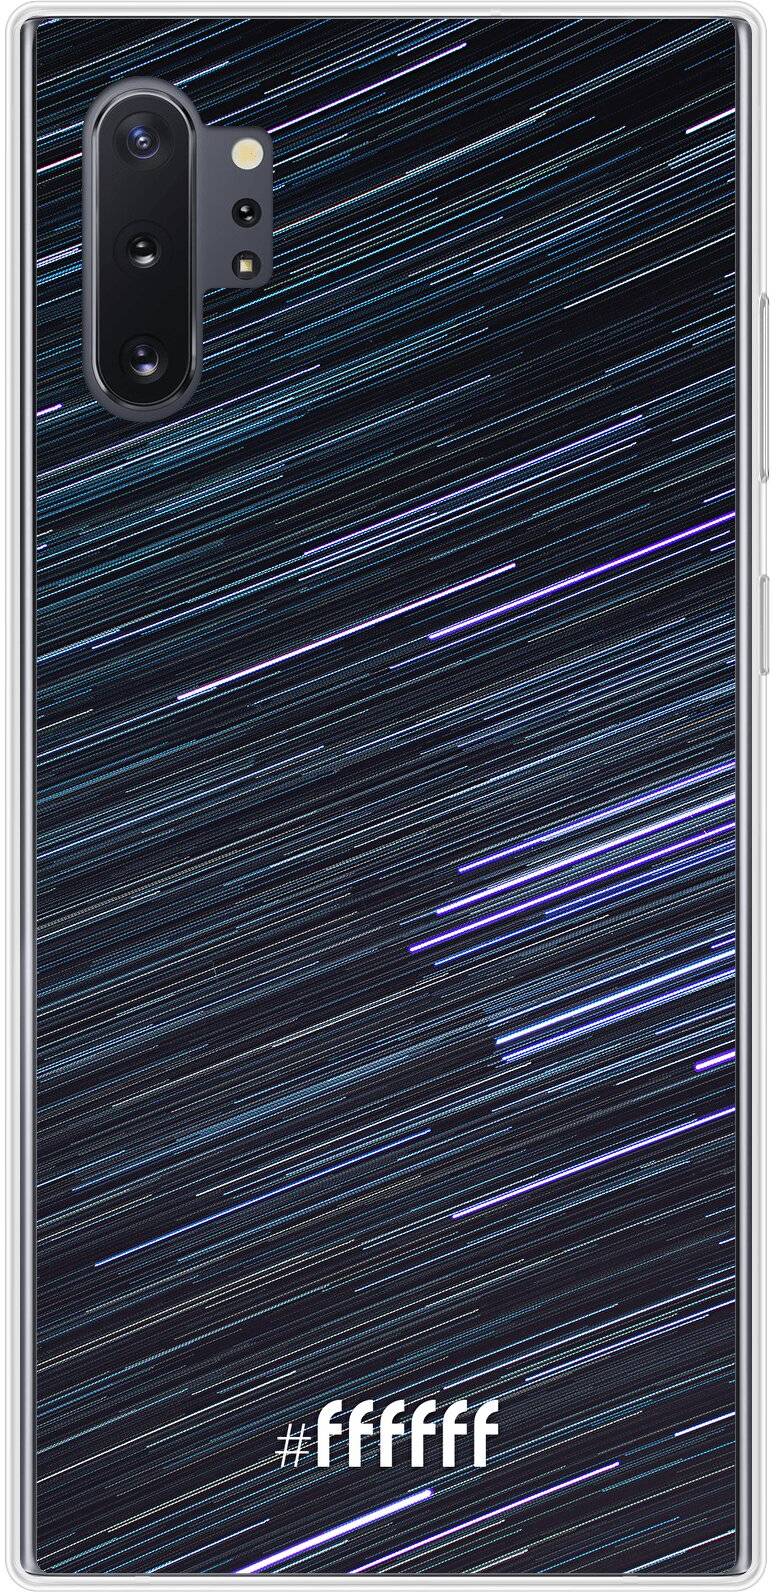 Moving Stars Galaxy Note 10 Plus